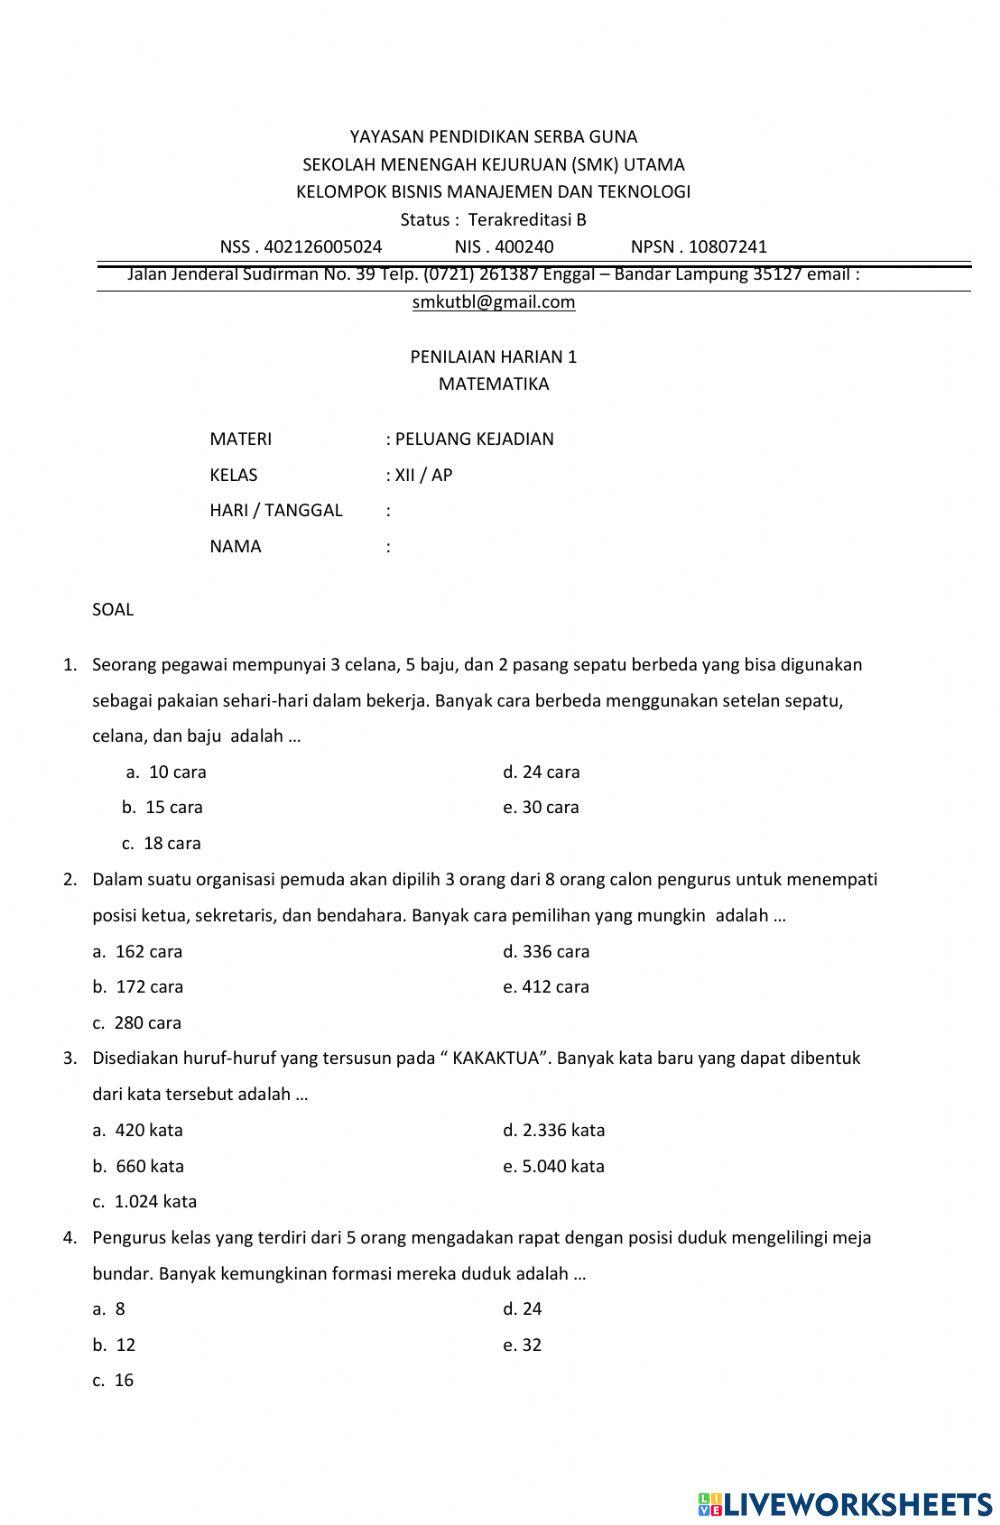 PH 1 Peluang worksheet | Live Worksheets